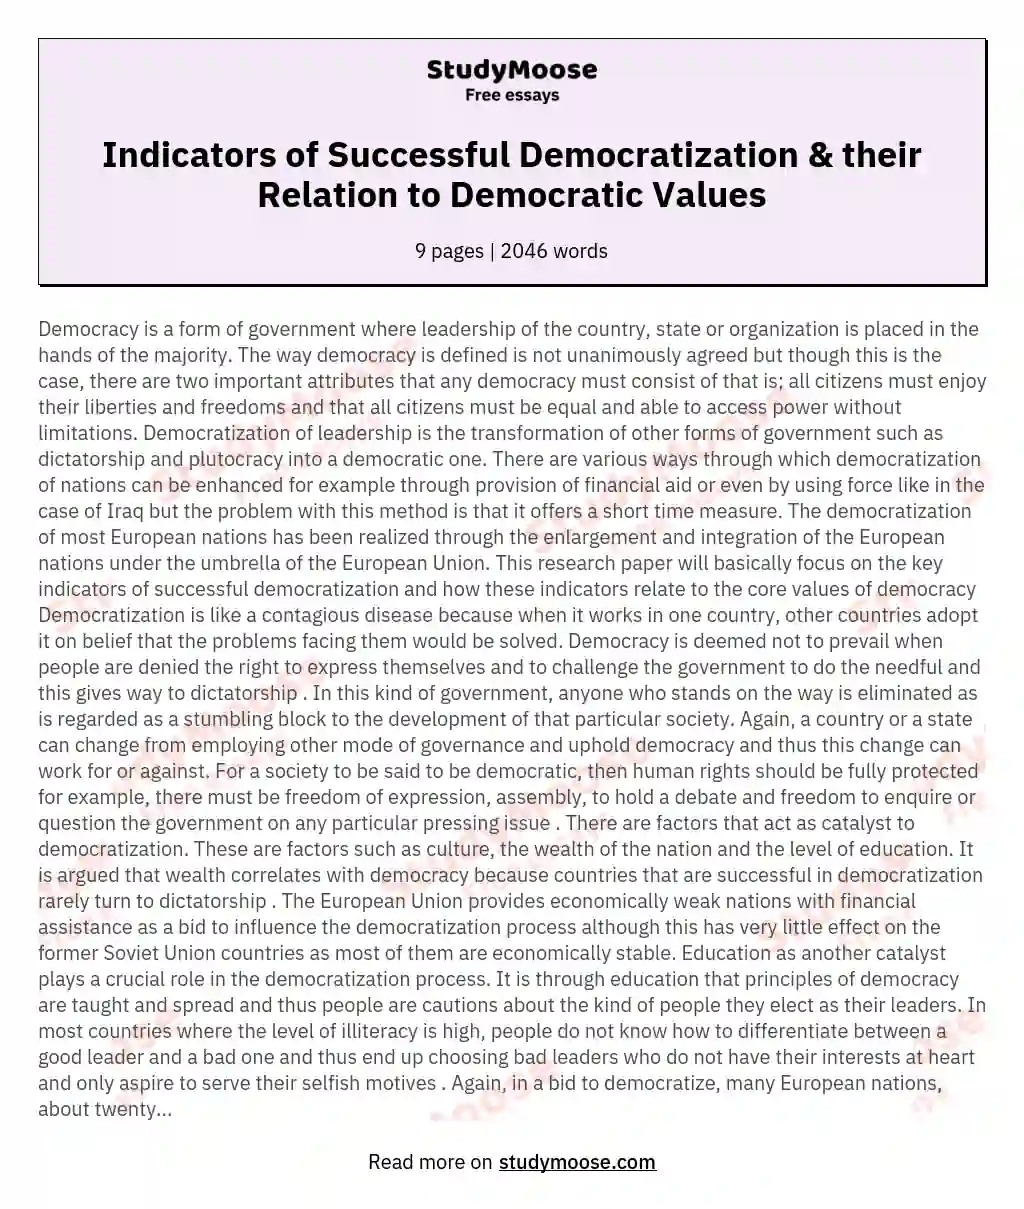 Indicators of Successful Democratization & their Relation to Democratic Values essay